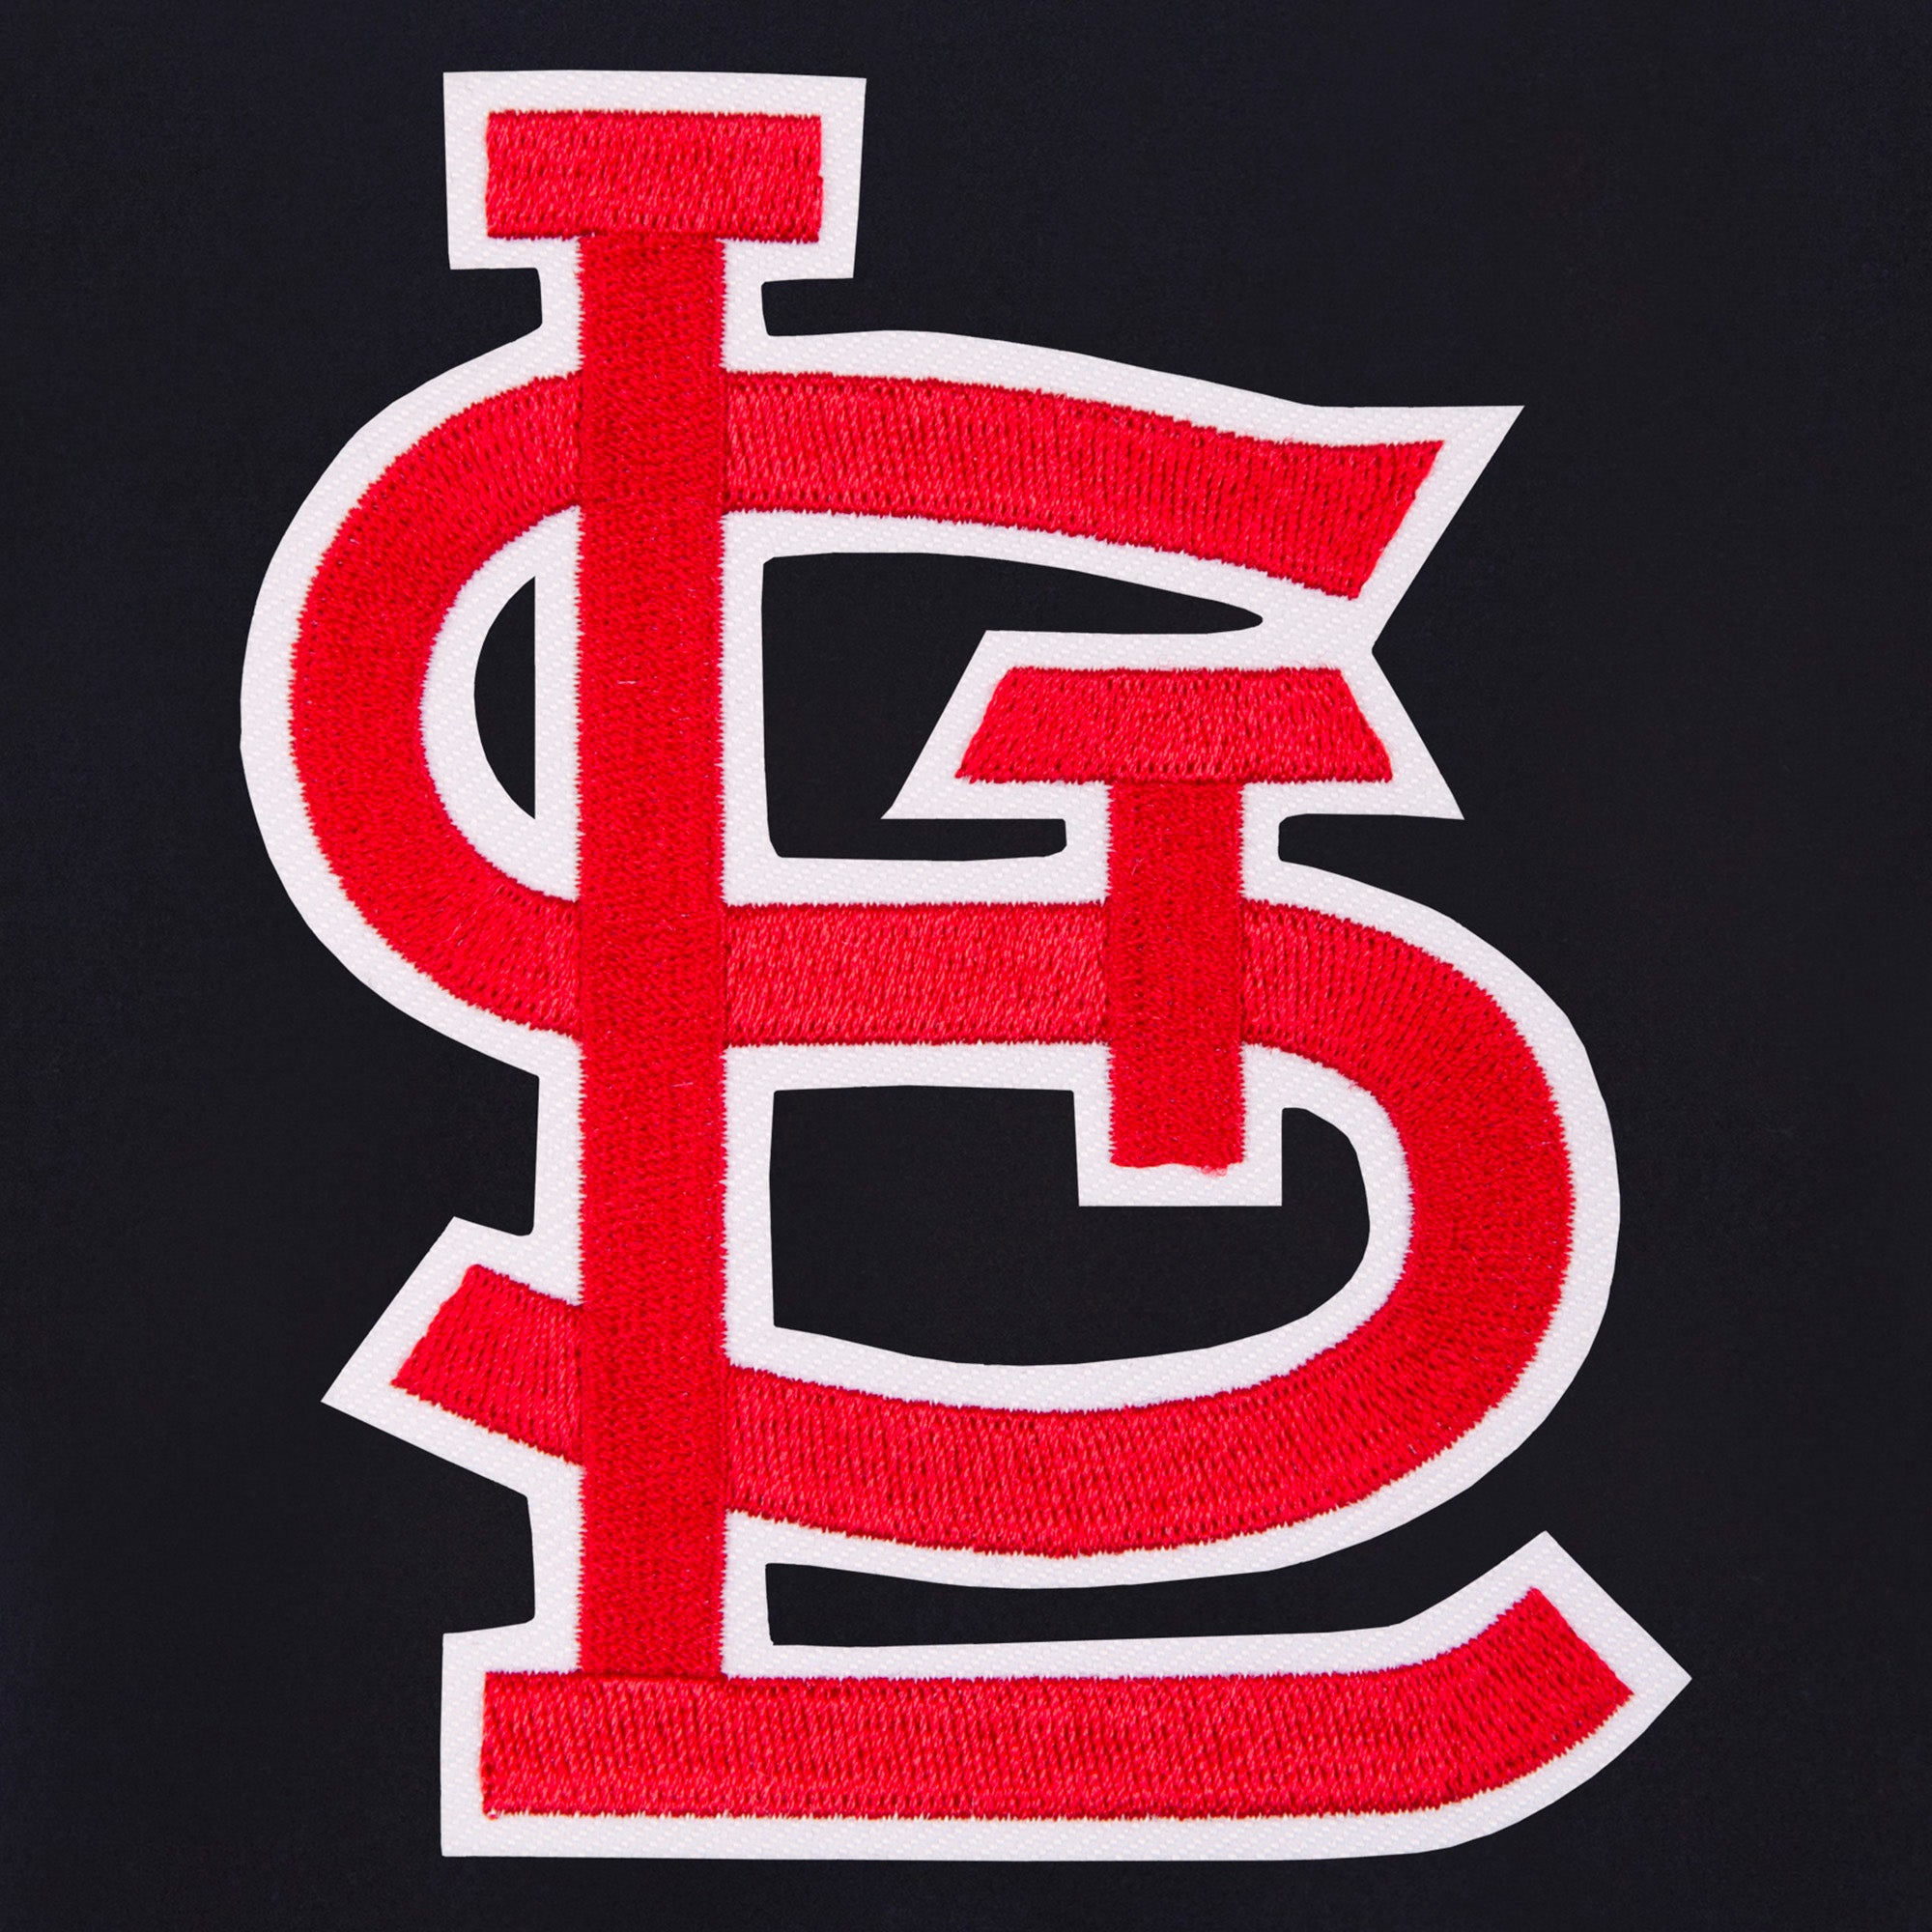 St. Louis Cardinals Jackets